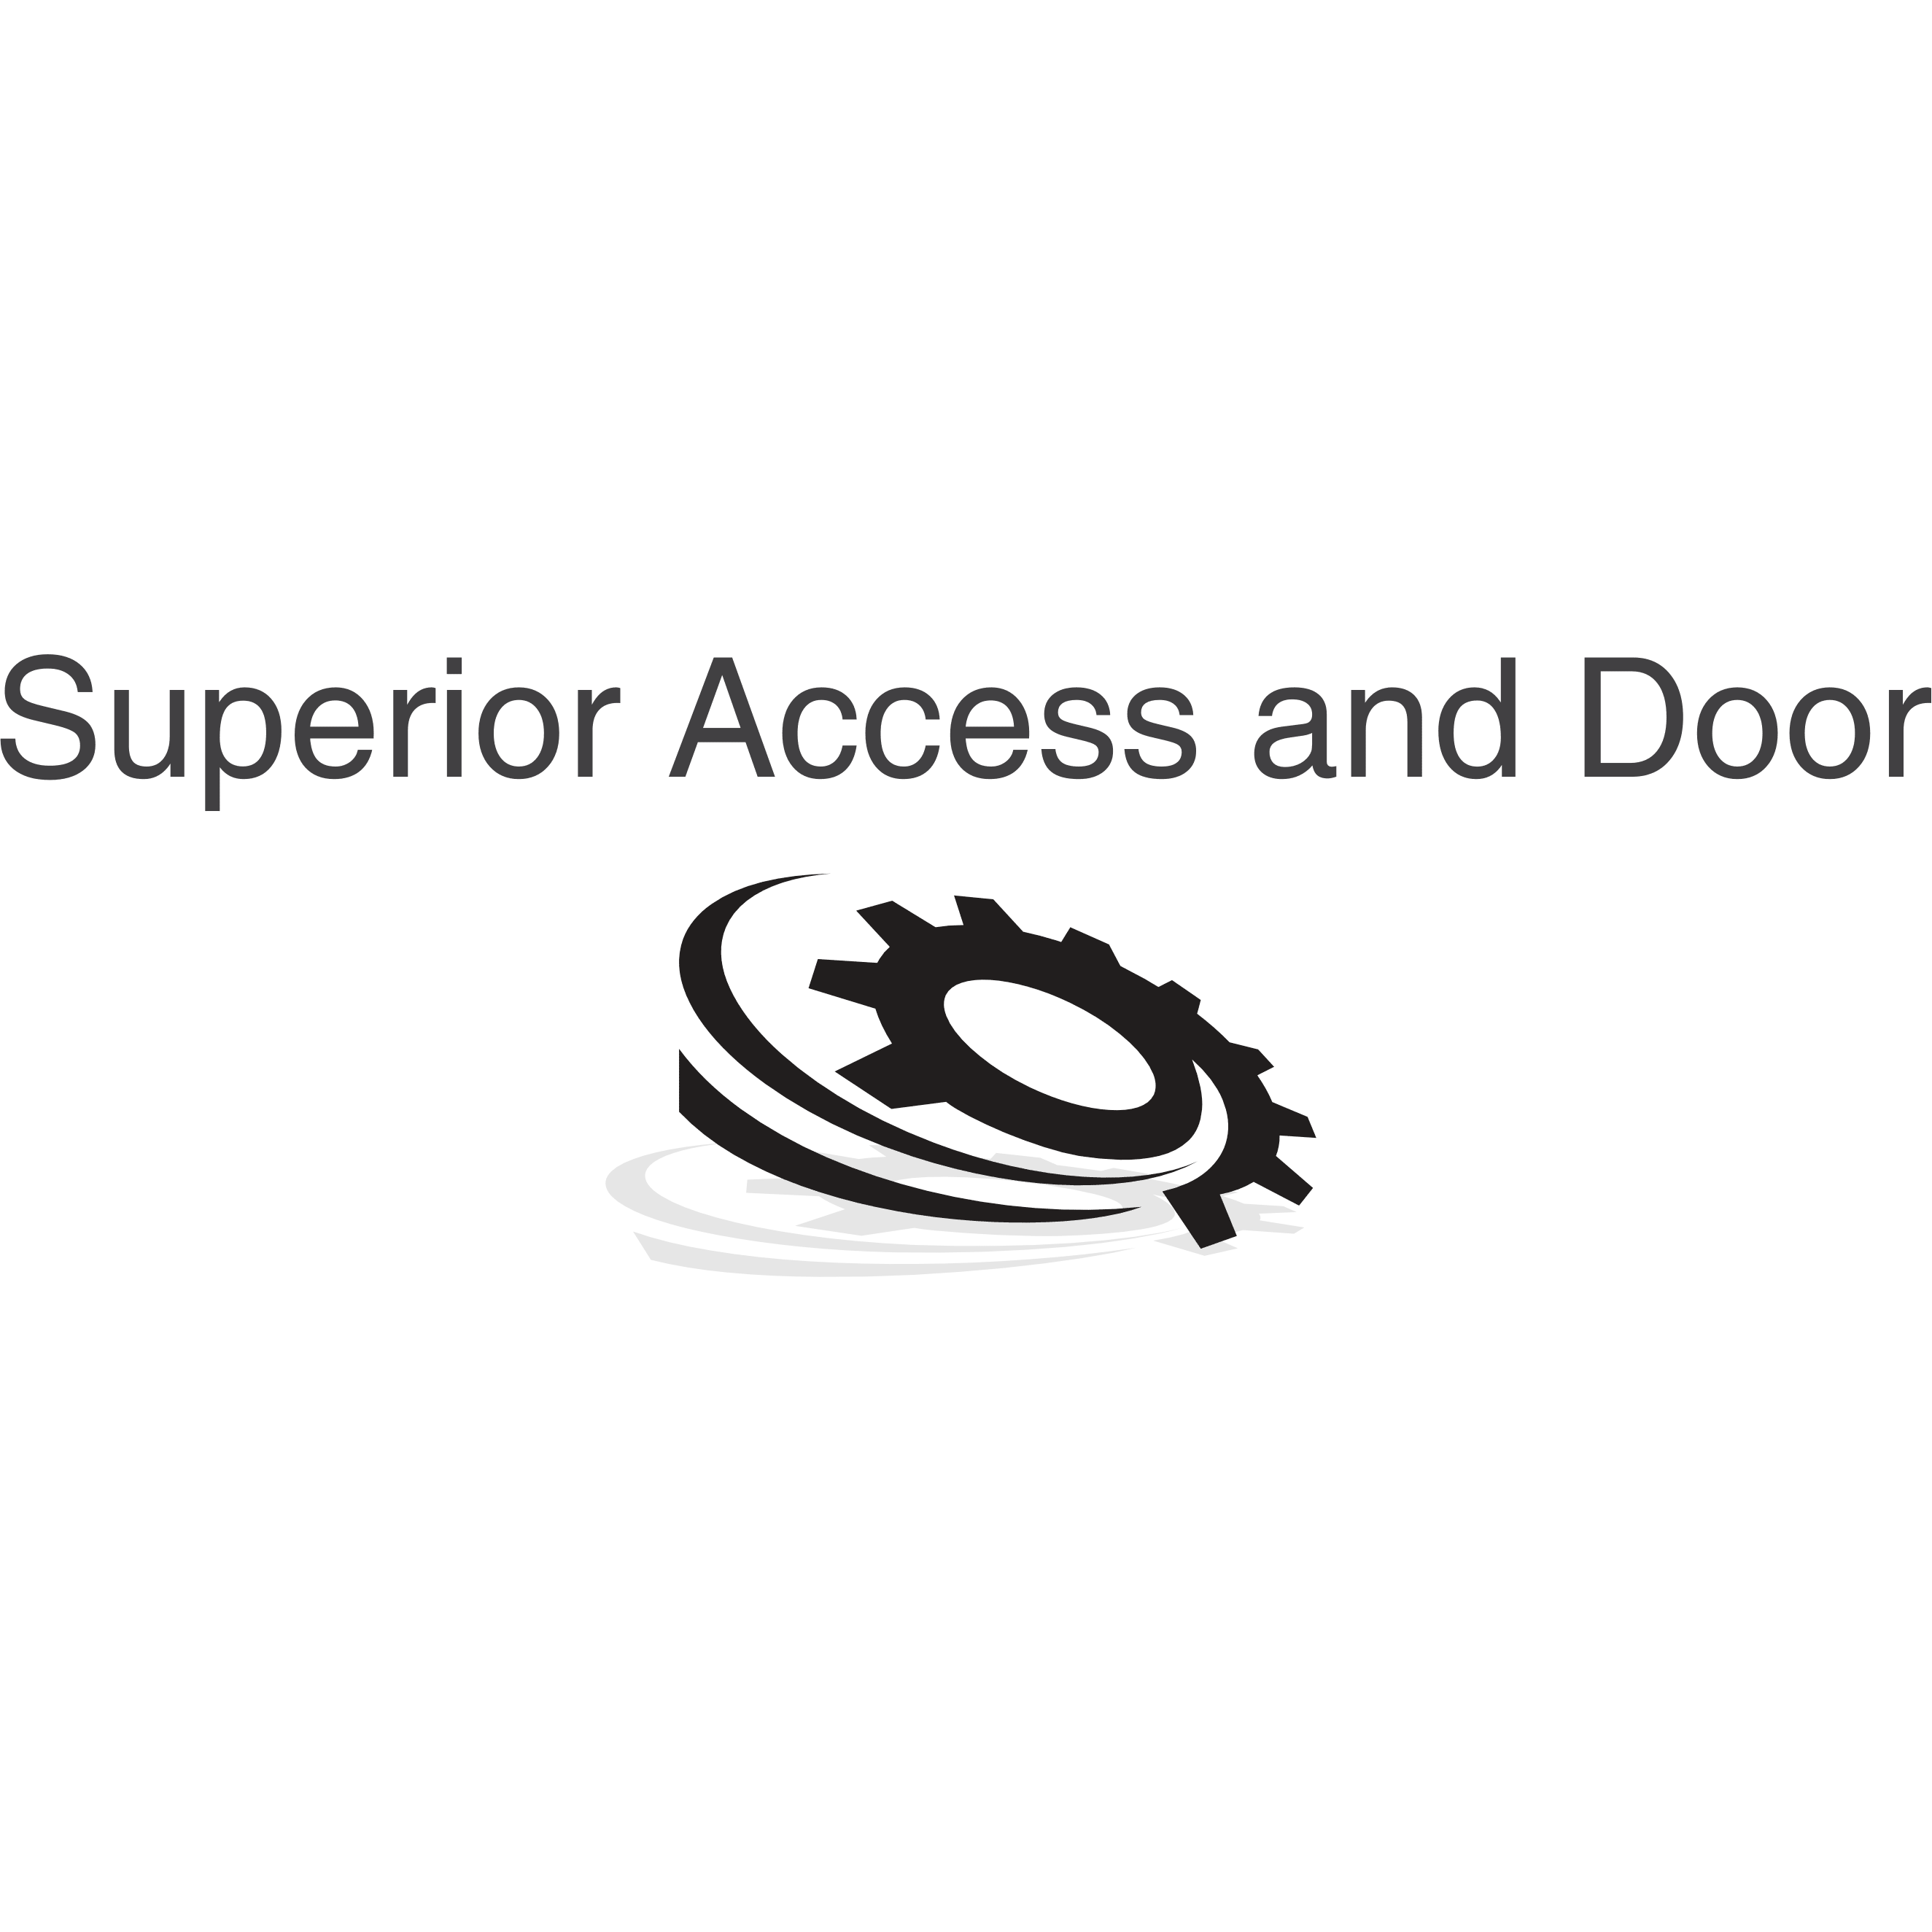 Superior Access and Door Photo